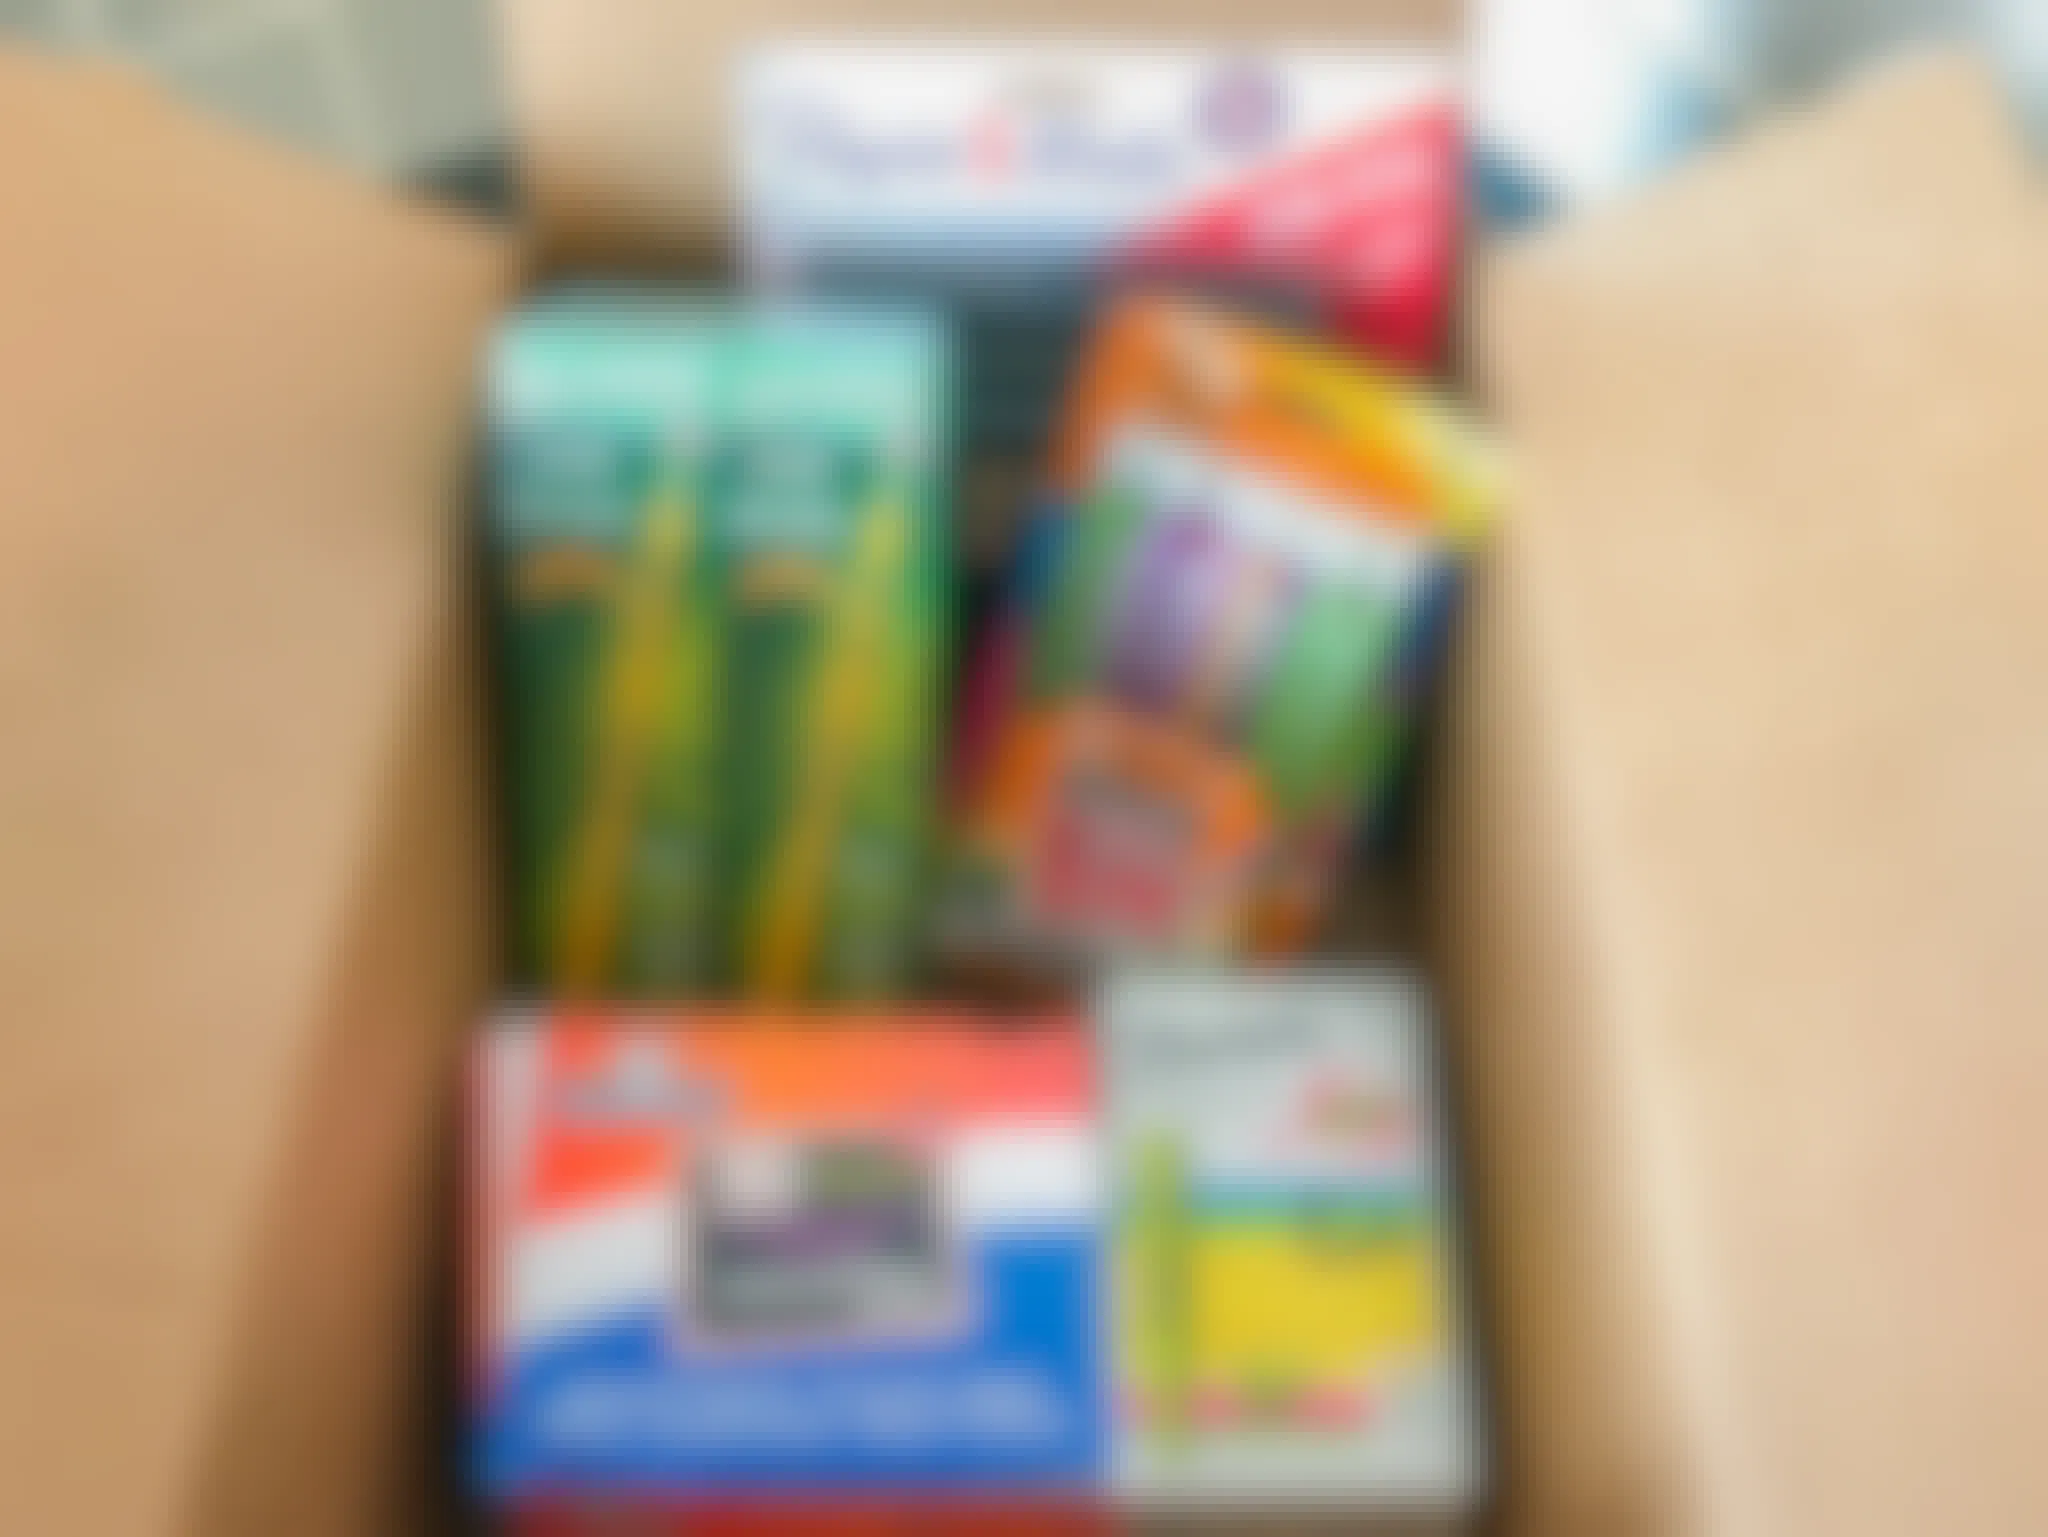 a box full of school supplies